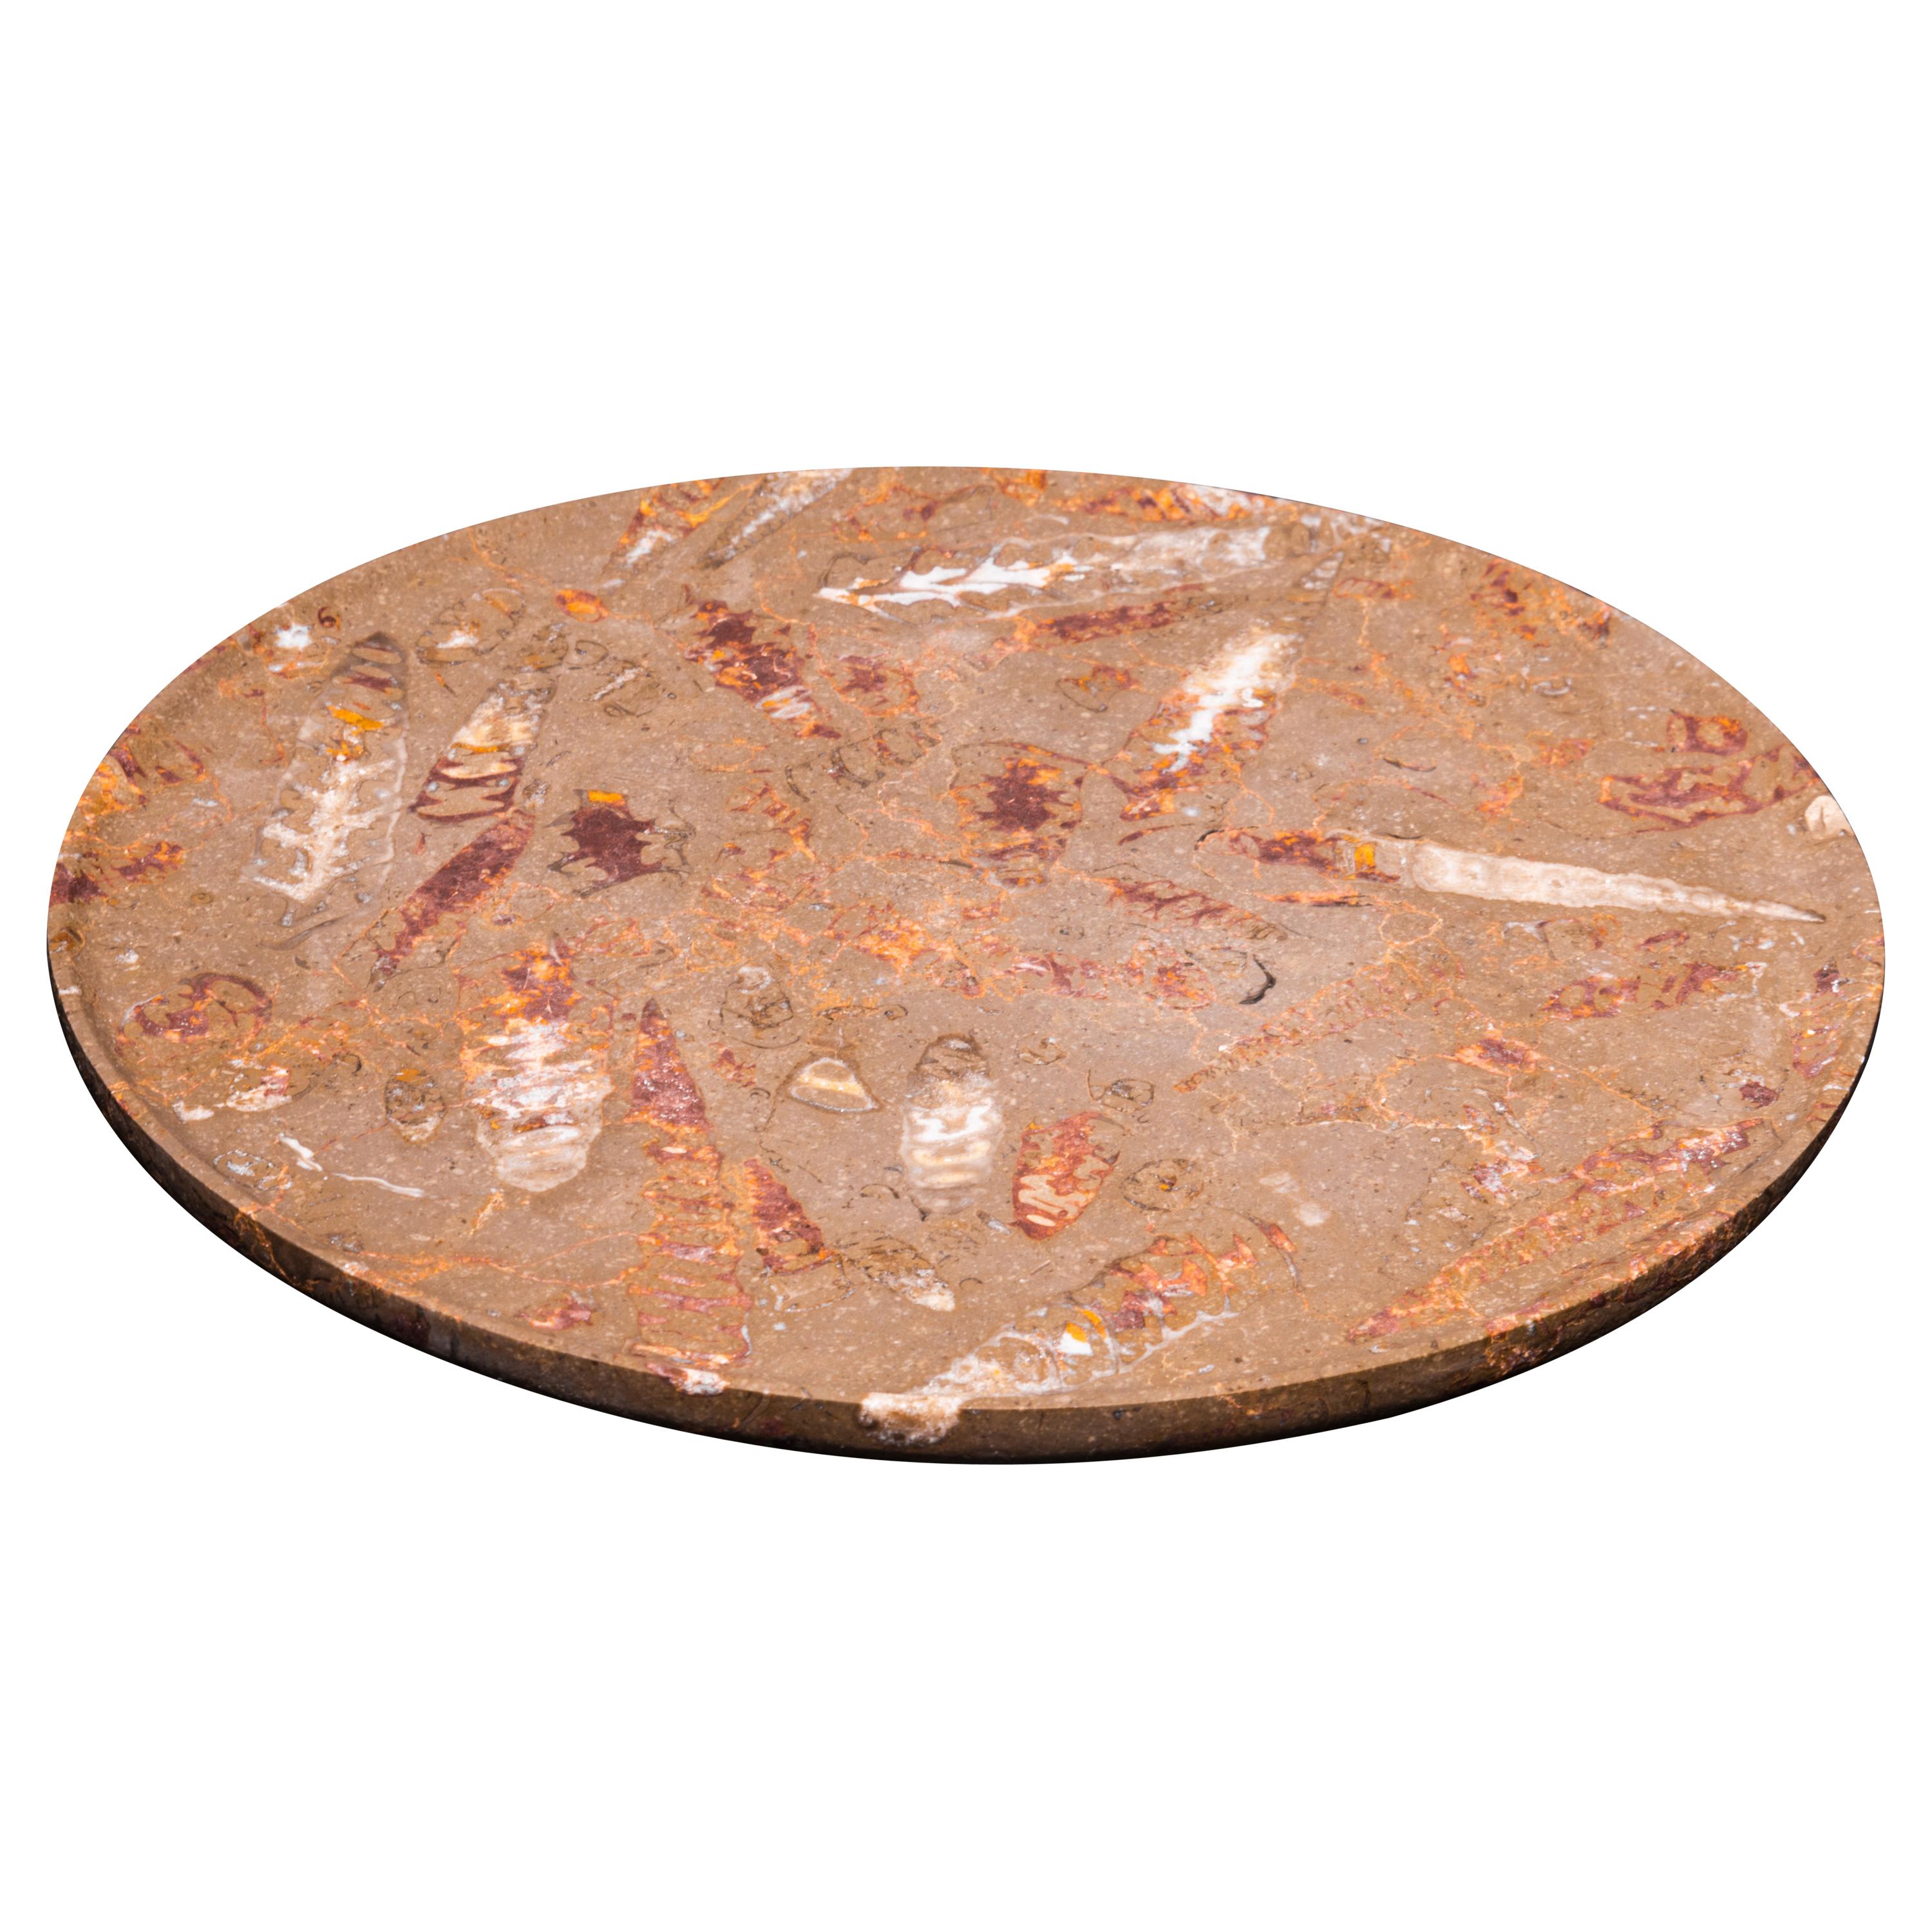 Assiette Mare contemporaine Aina en marbre fossile jurassique, collection Living